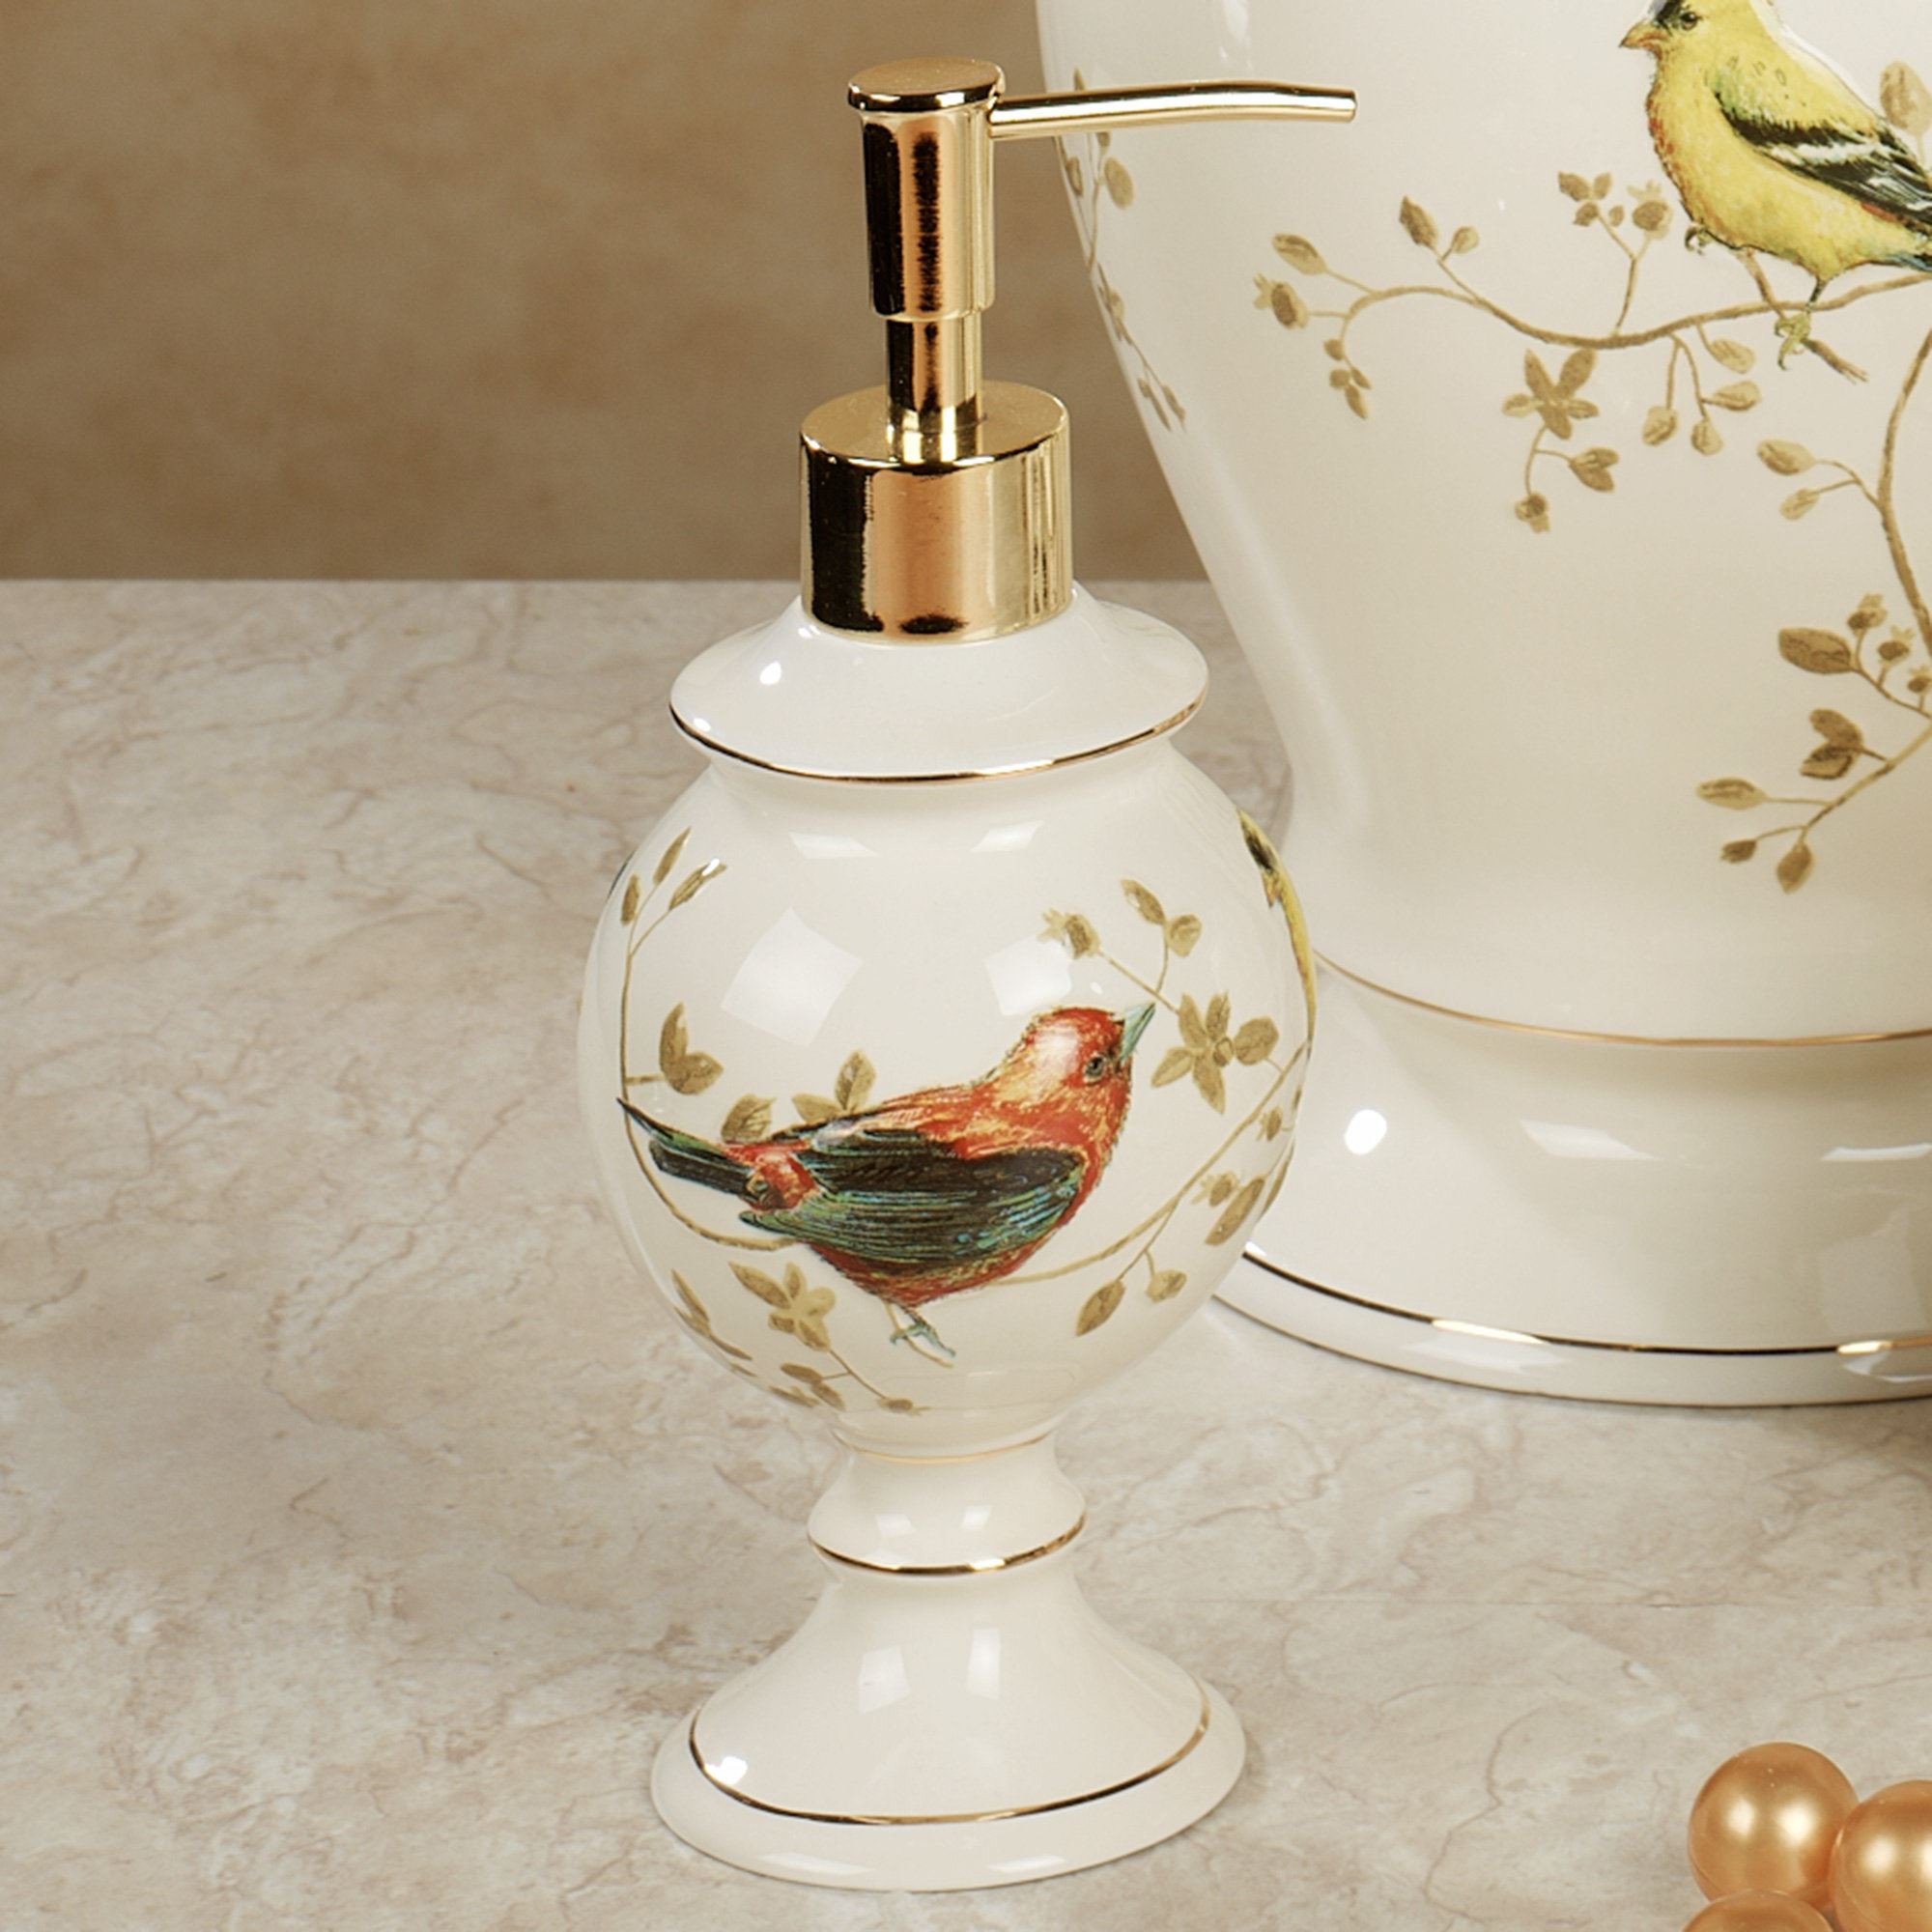 Bird Bathroom Decor
 Gilded Bird Ceramic Bath Accessories